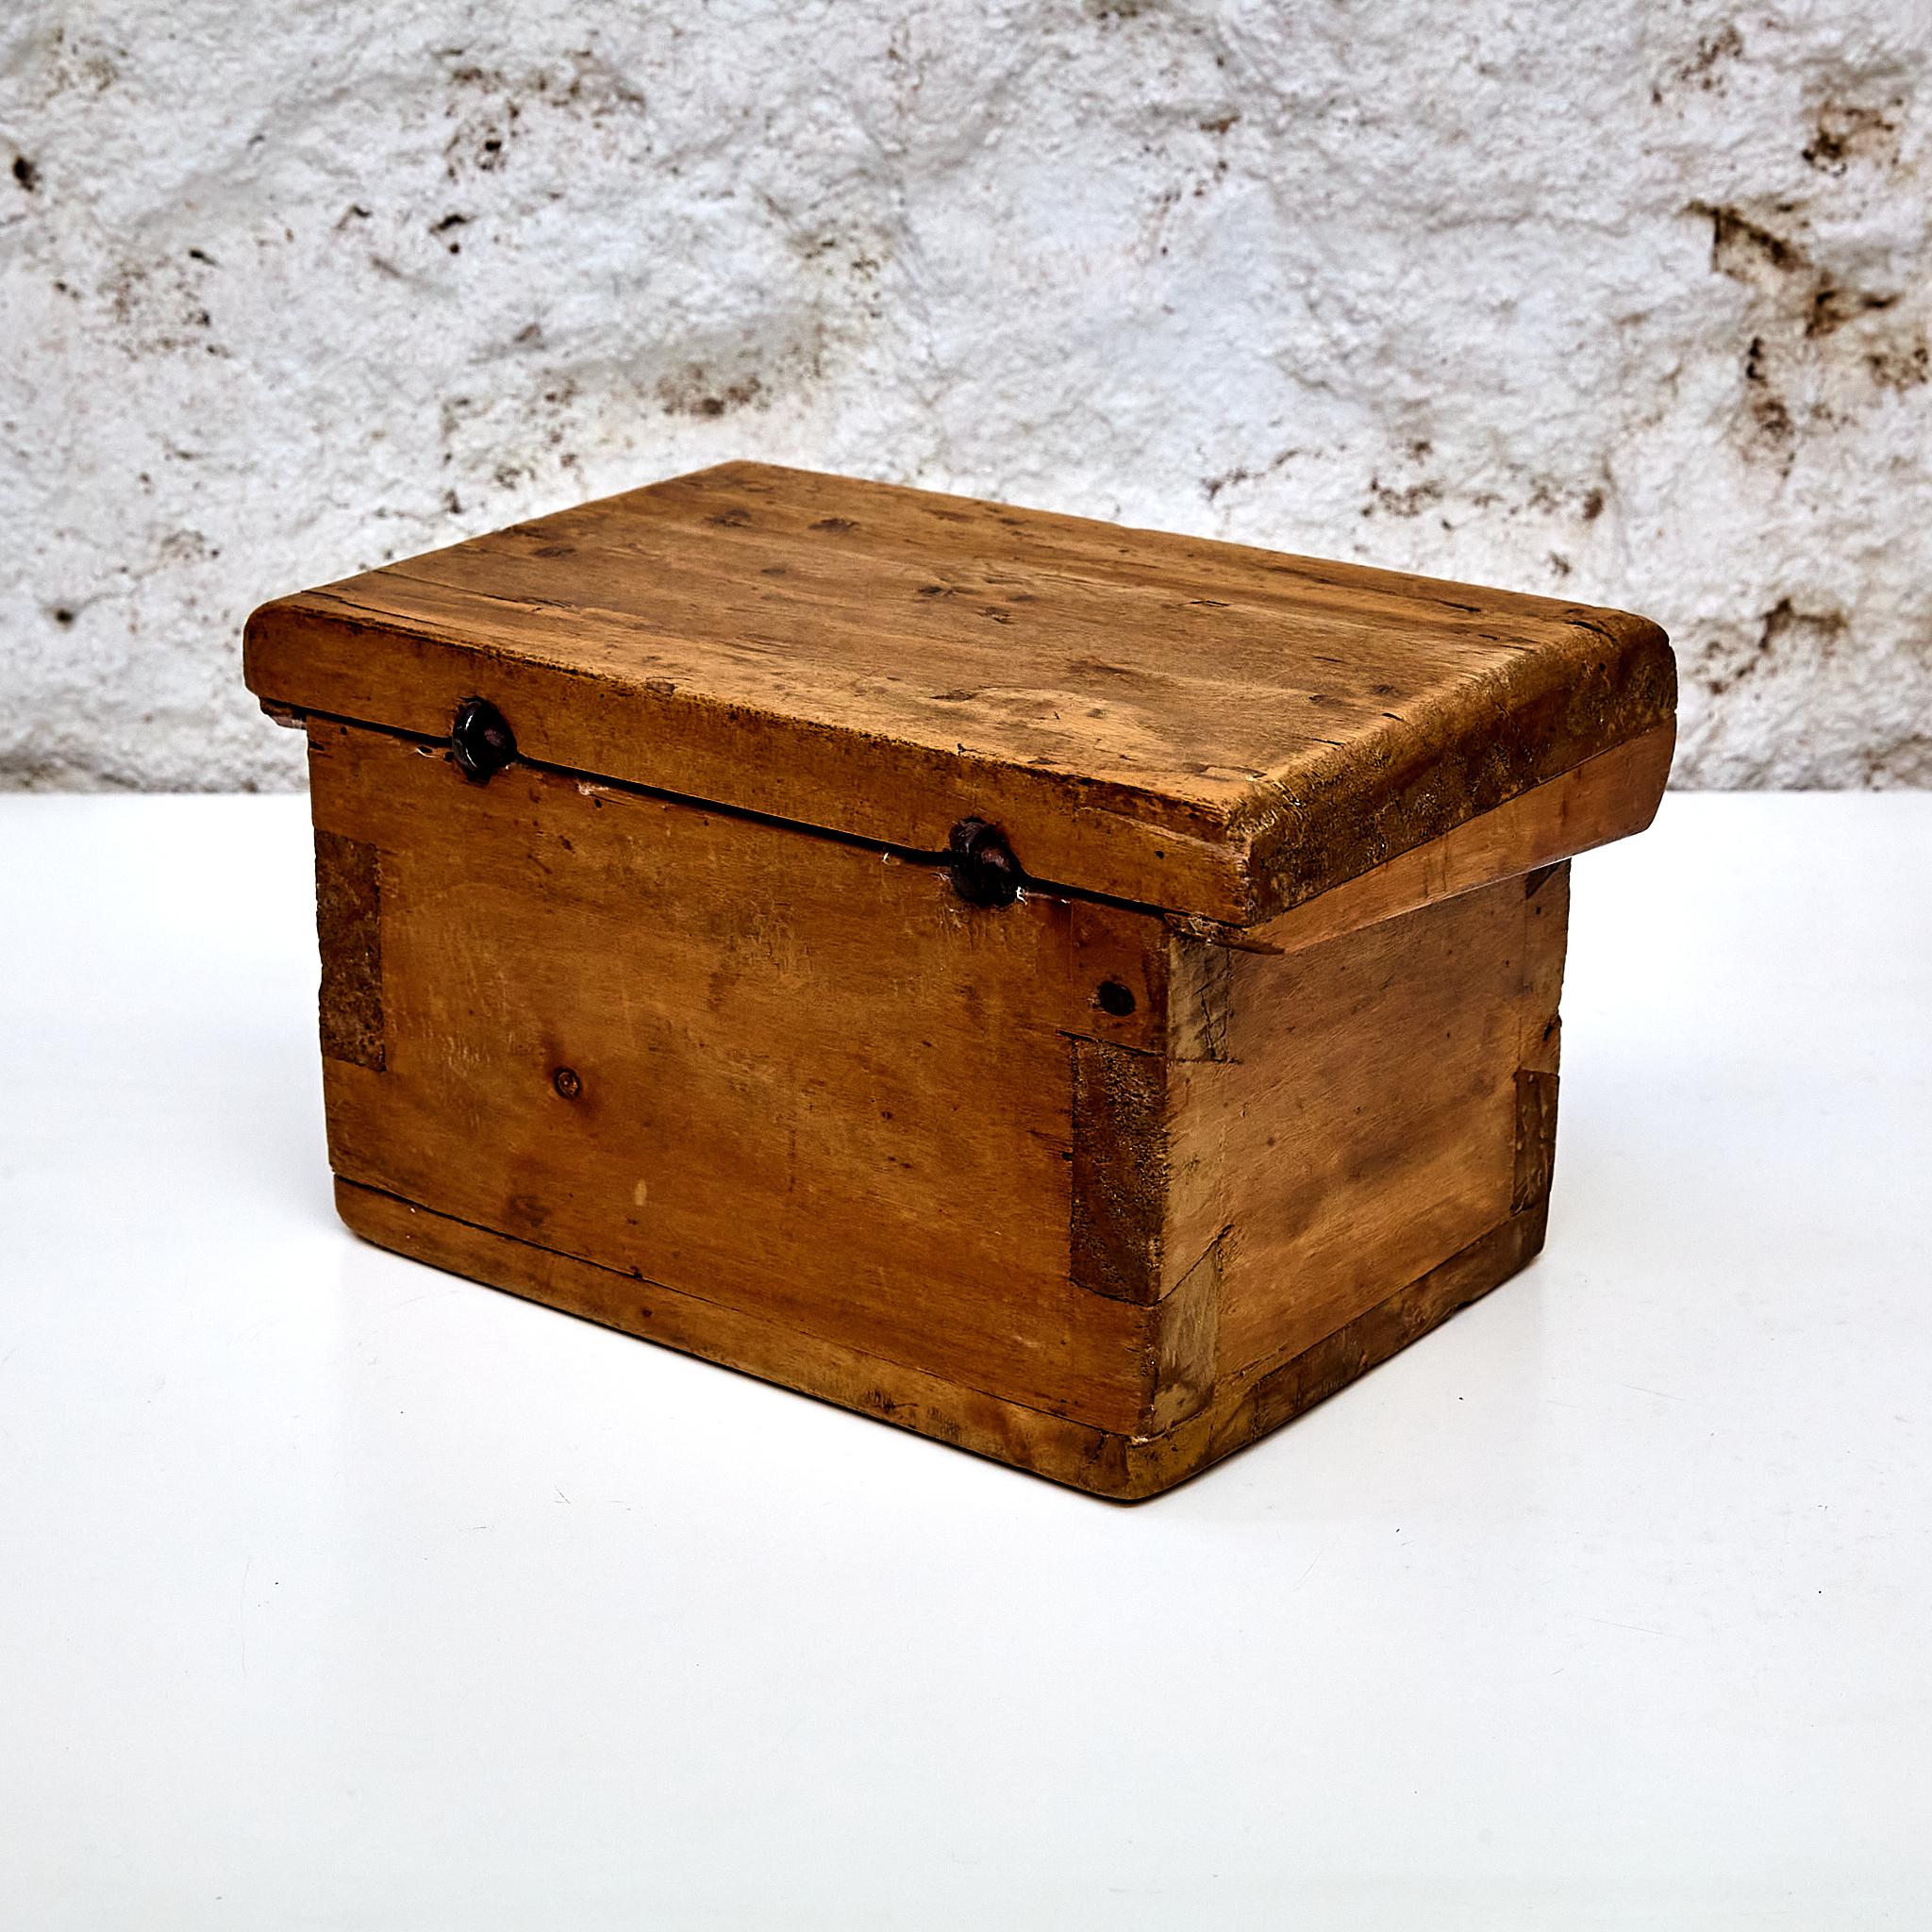 Primitive Rustic Wood Box with Key Lock, circa 1930